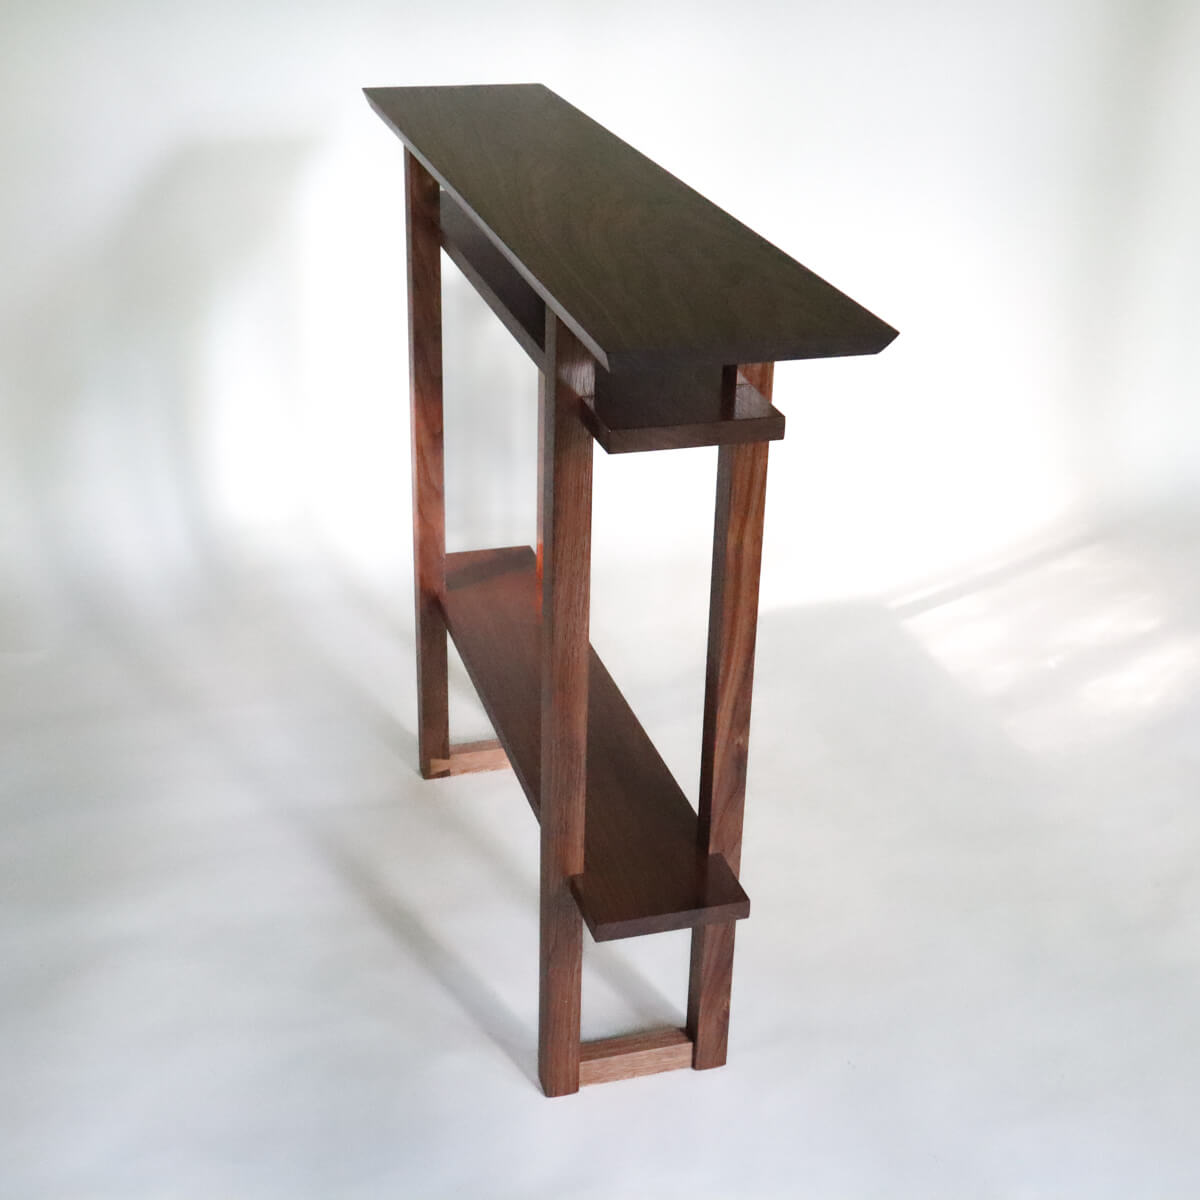 a narrow hall table with shelves for display, handmade wood furniture design by Mokuzai Furniture